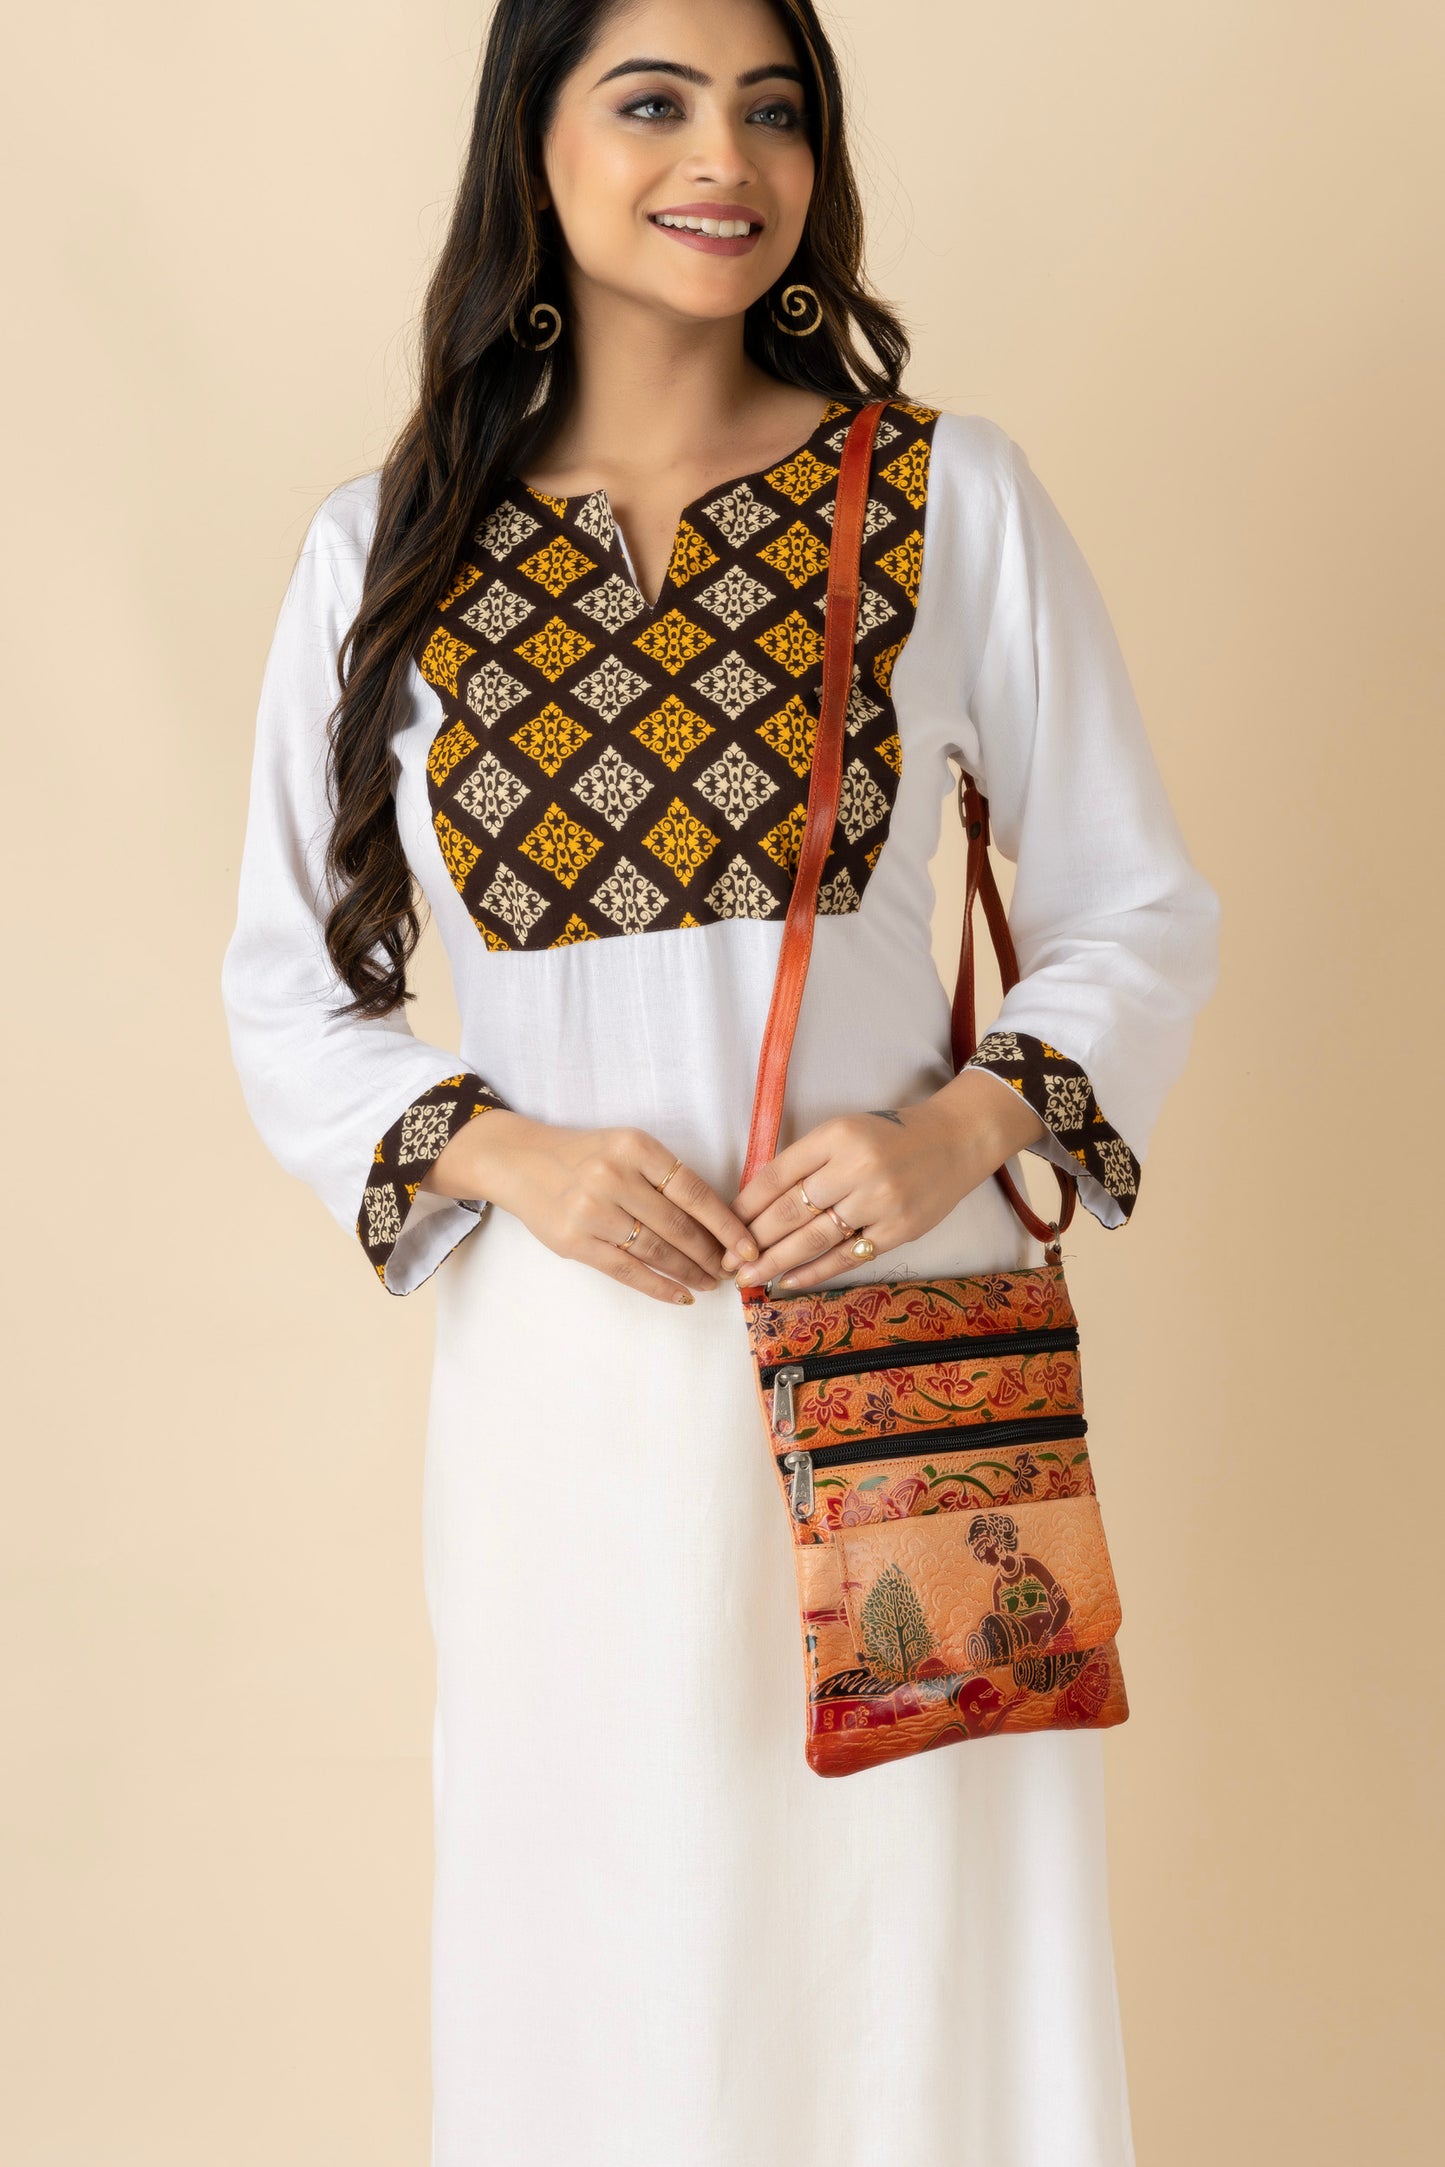 Shantiniketan Leather Traditional Printed Women Brown Cross Body Sling Messenger Bag (9*7)